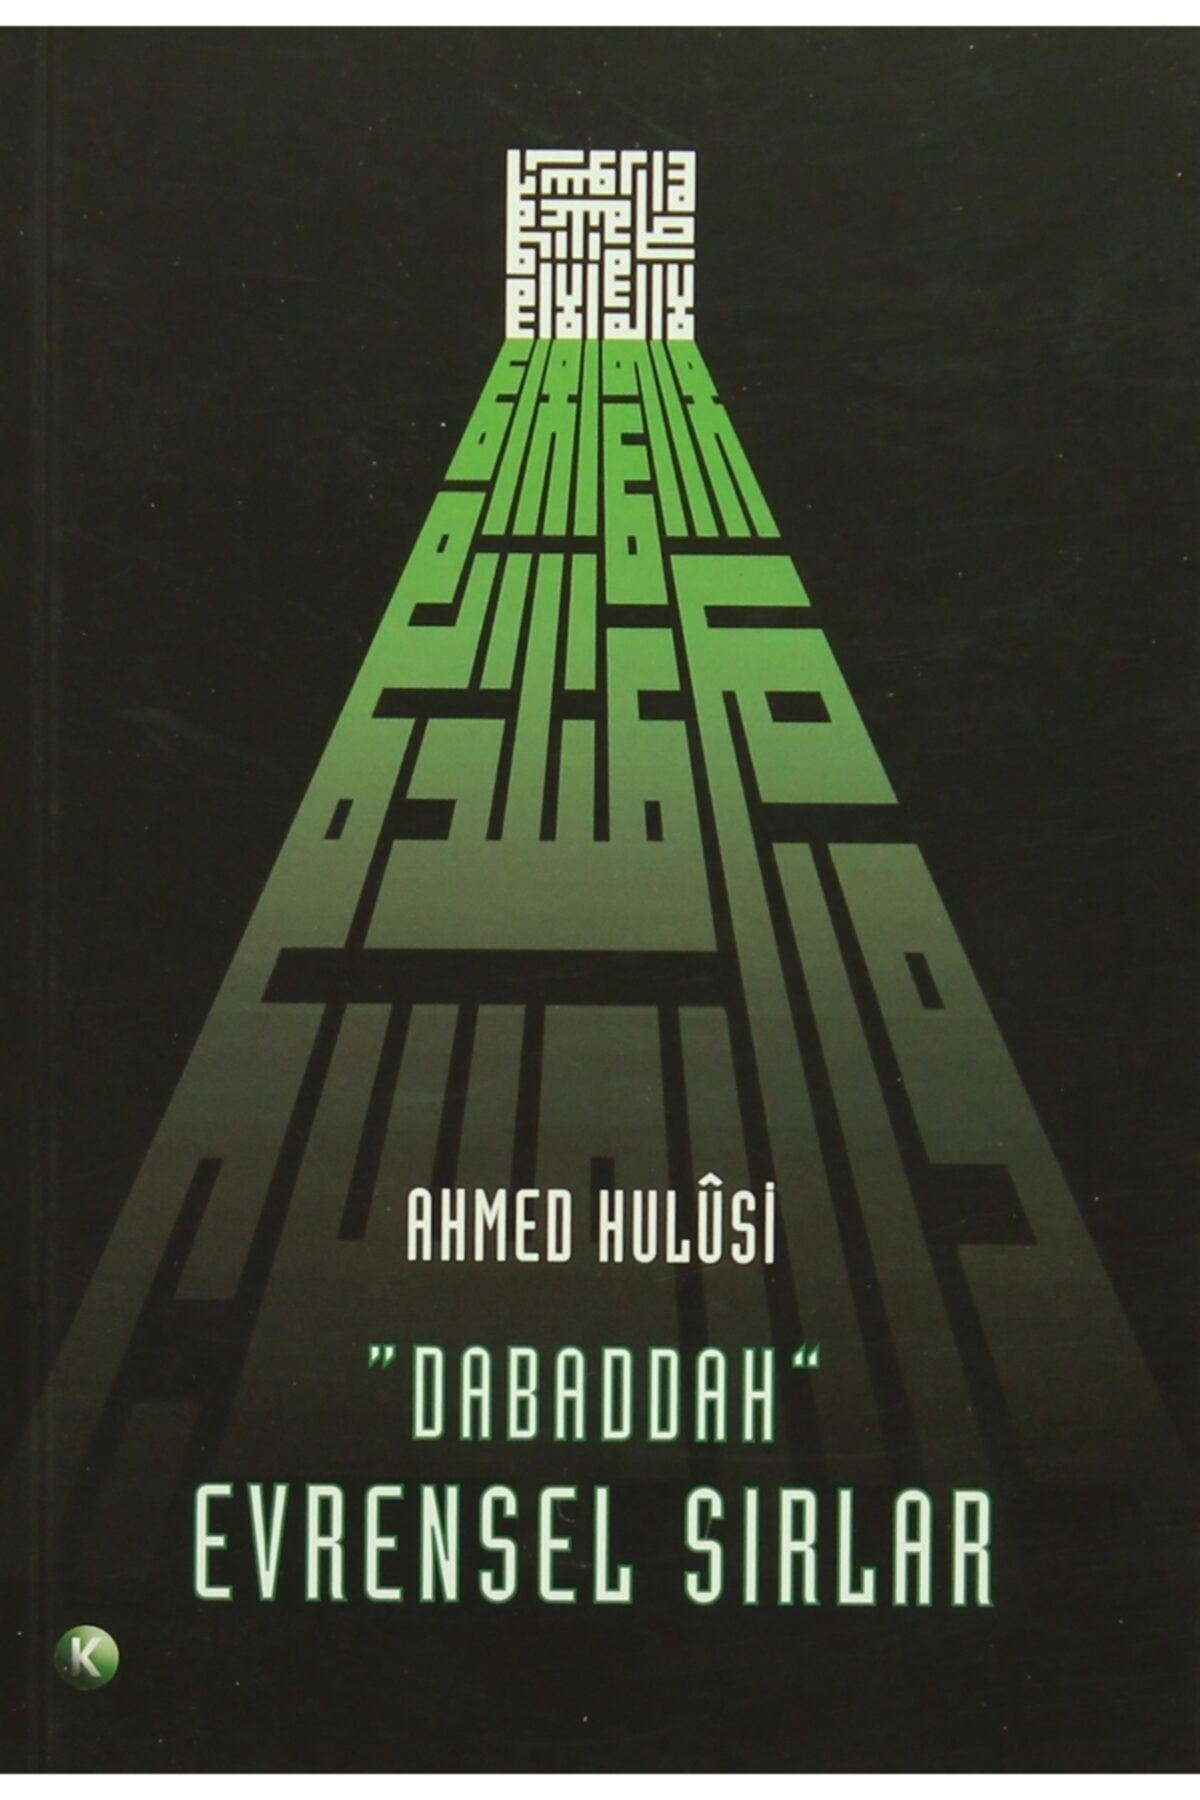 AHMED HULUSİ - DABADDAH EVRENSEL SIRLAR